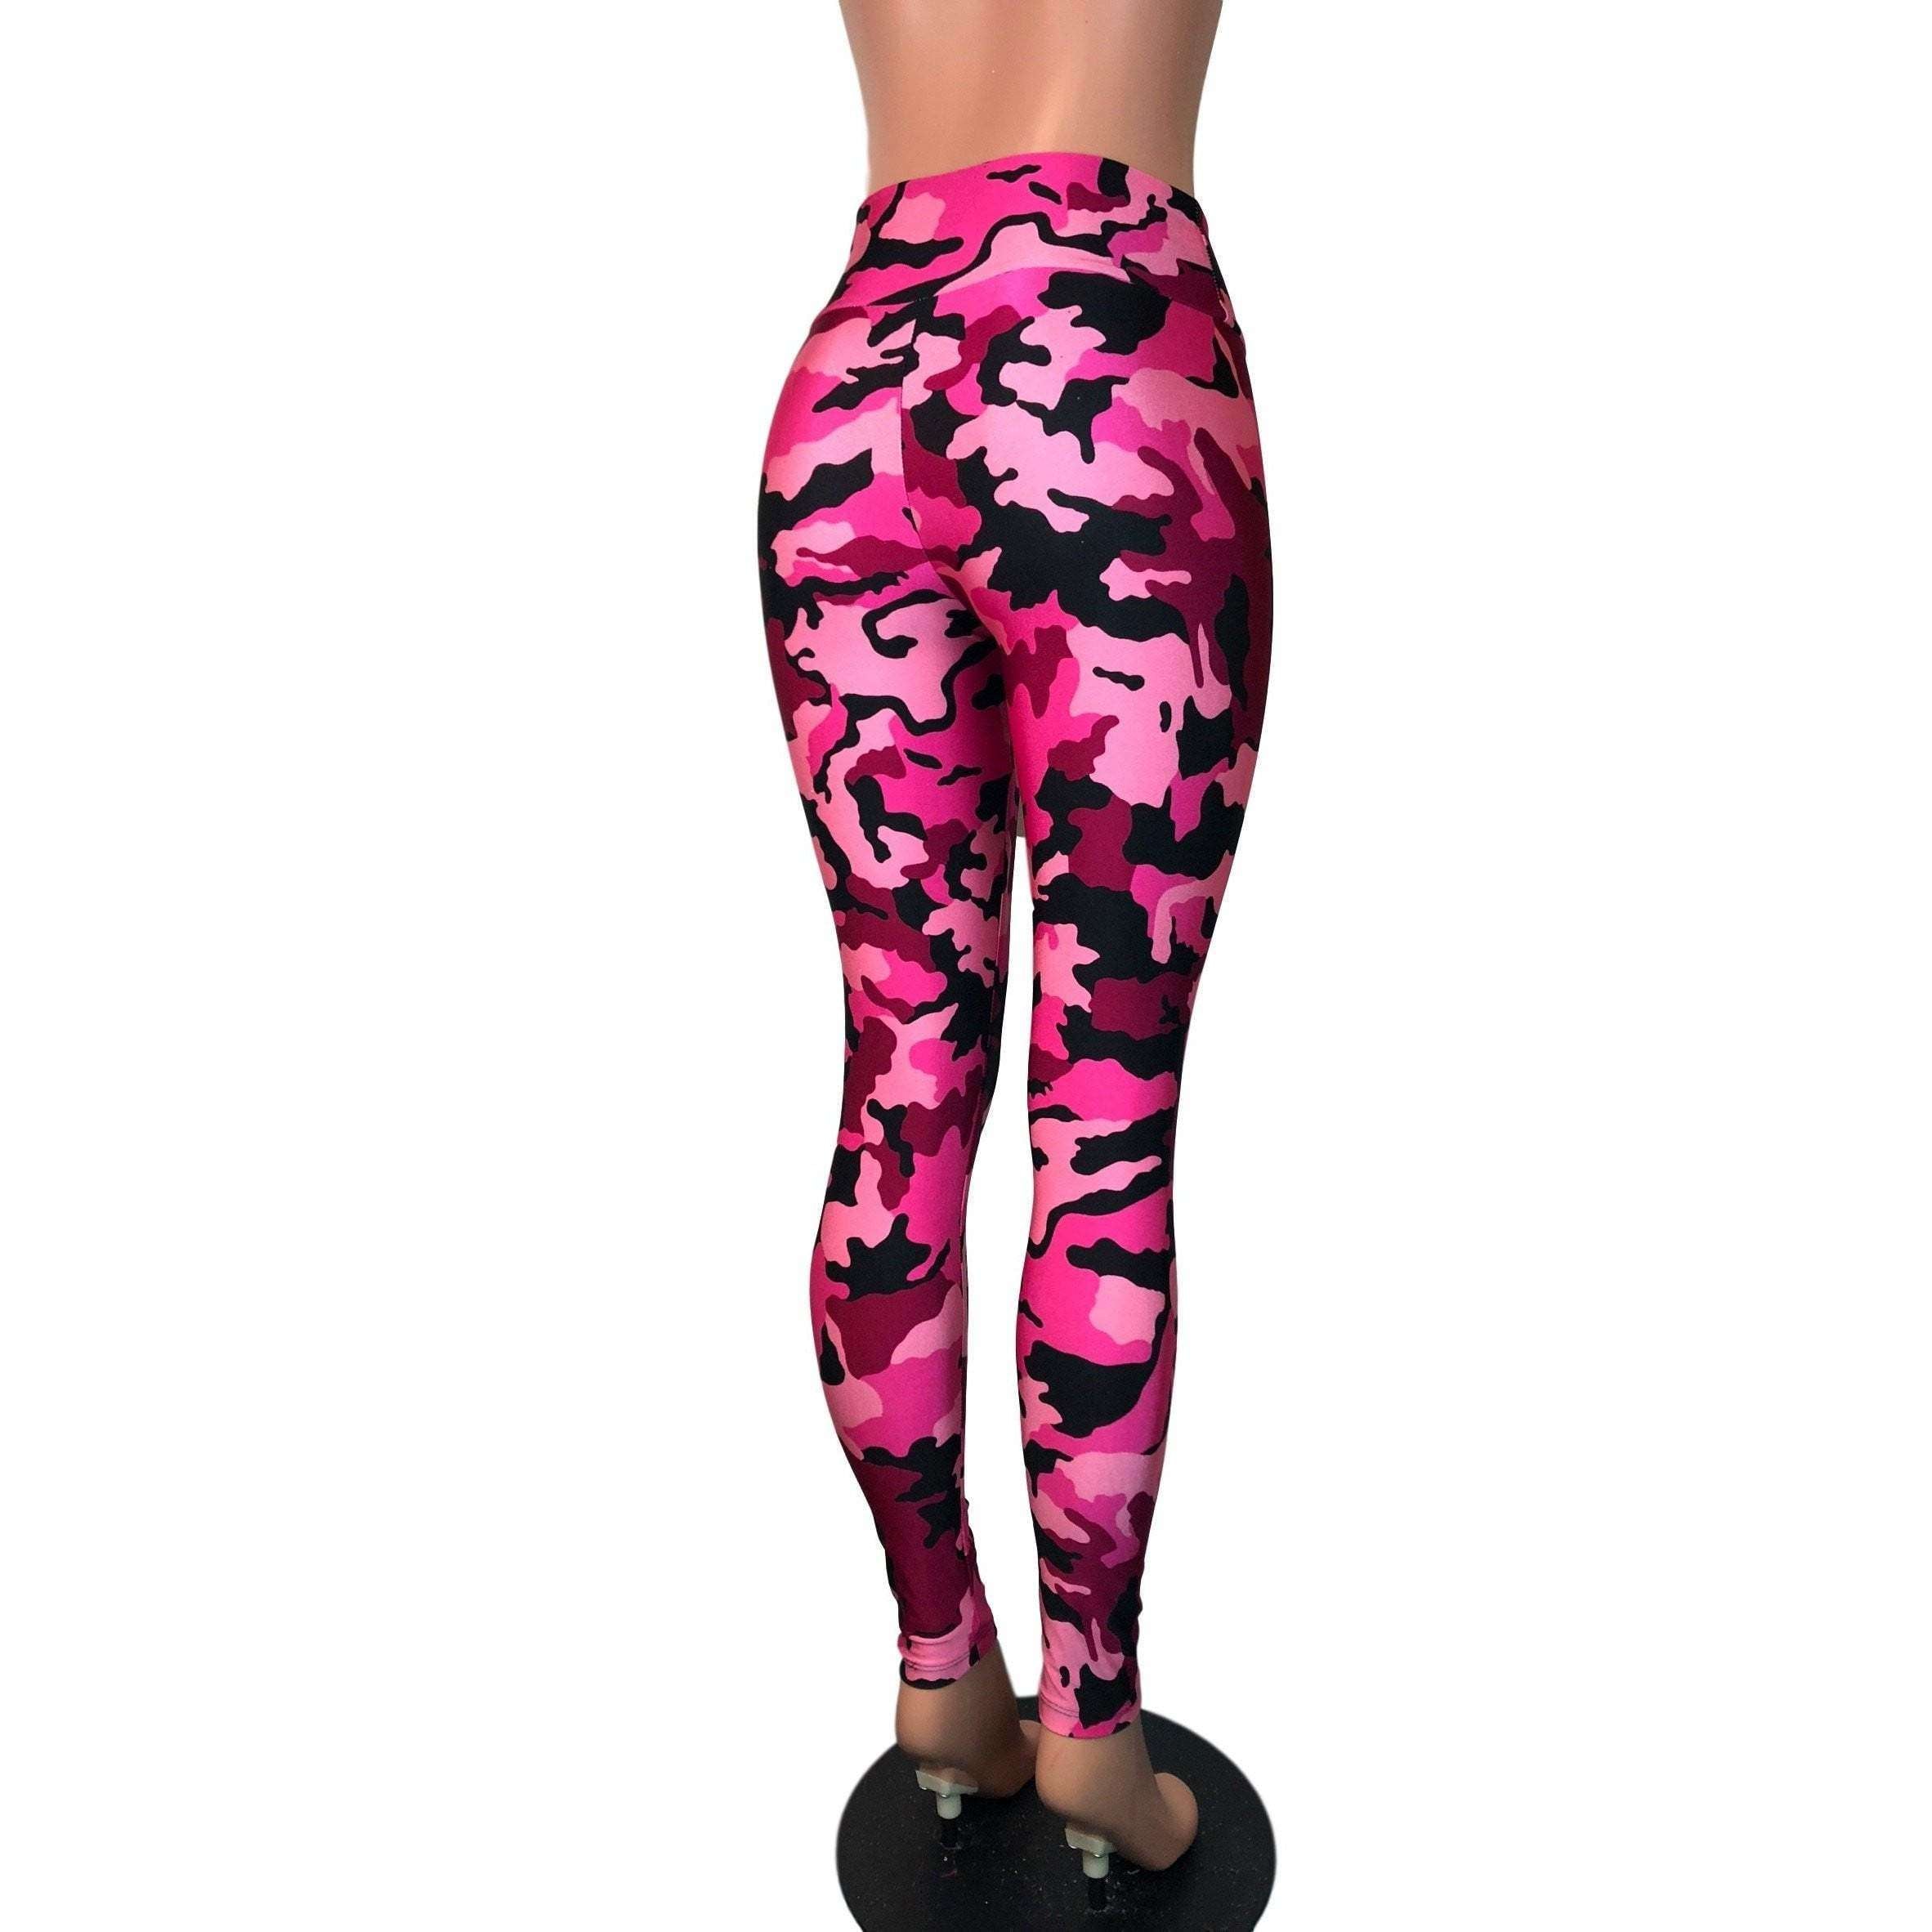 Tenen intern oosters Pink & Black Camo Camouflage High Waist Leggings Pants– Peridot Clothing